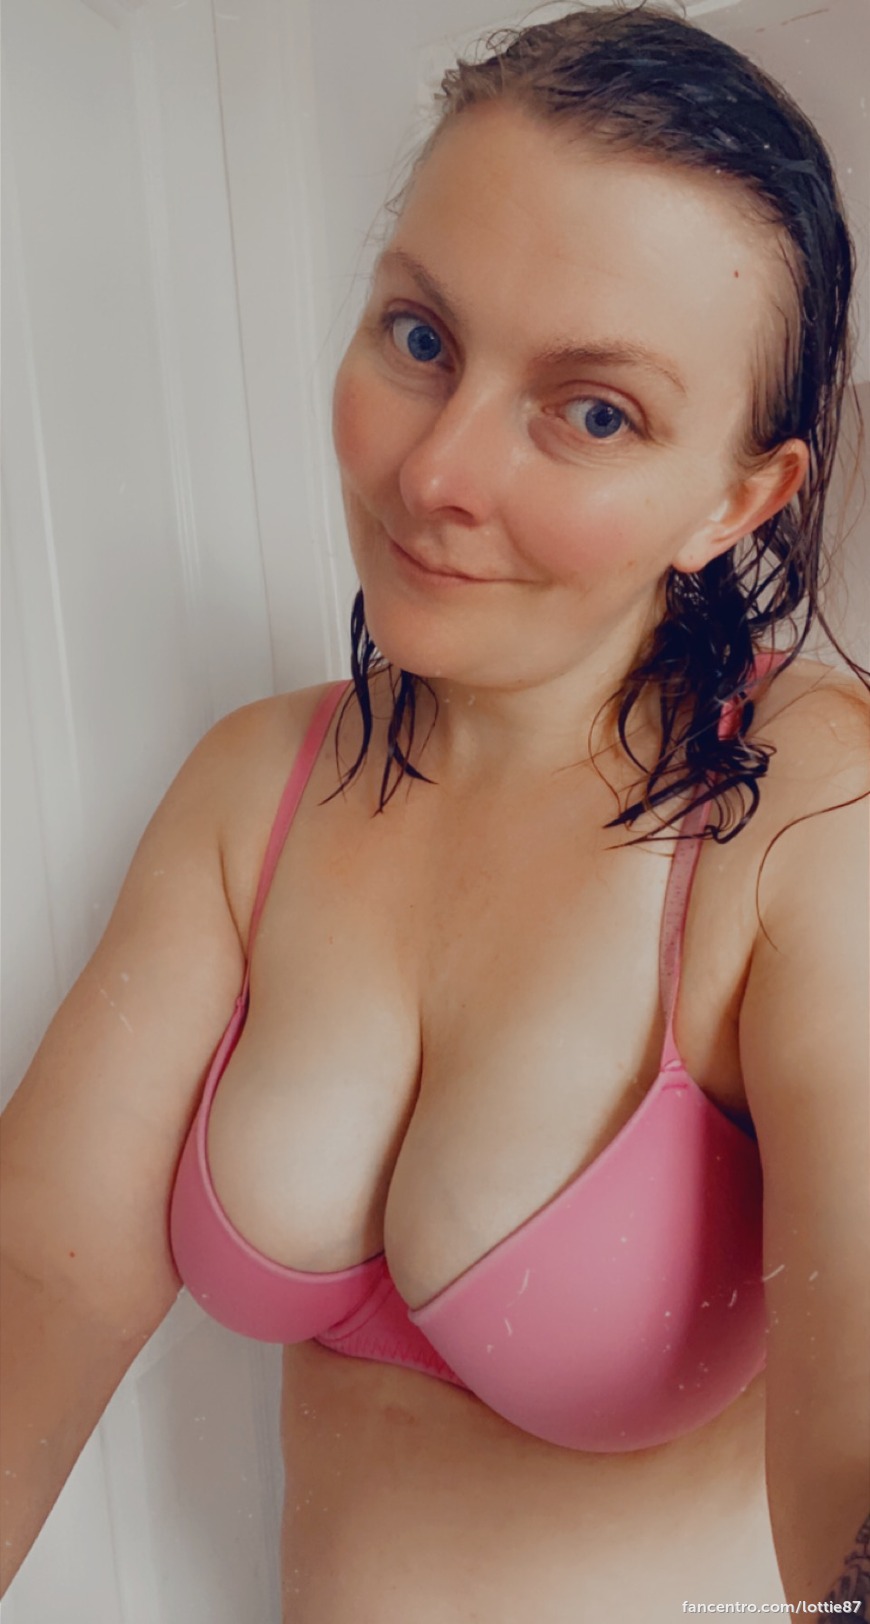 Selfie after a hot bath - post image